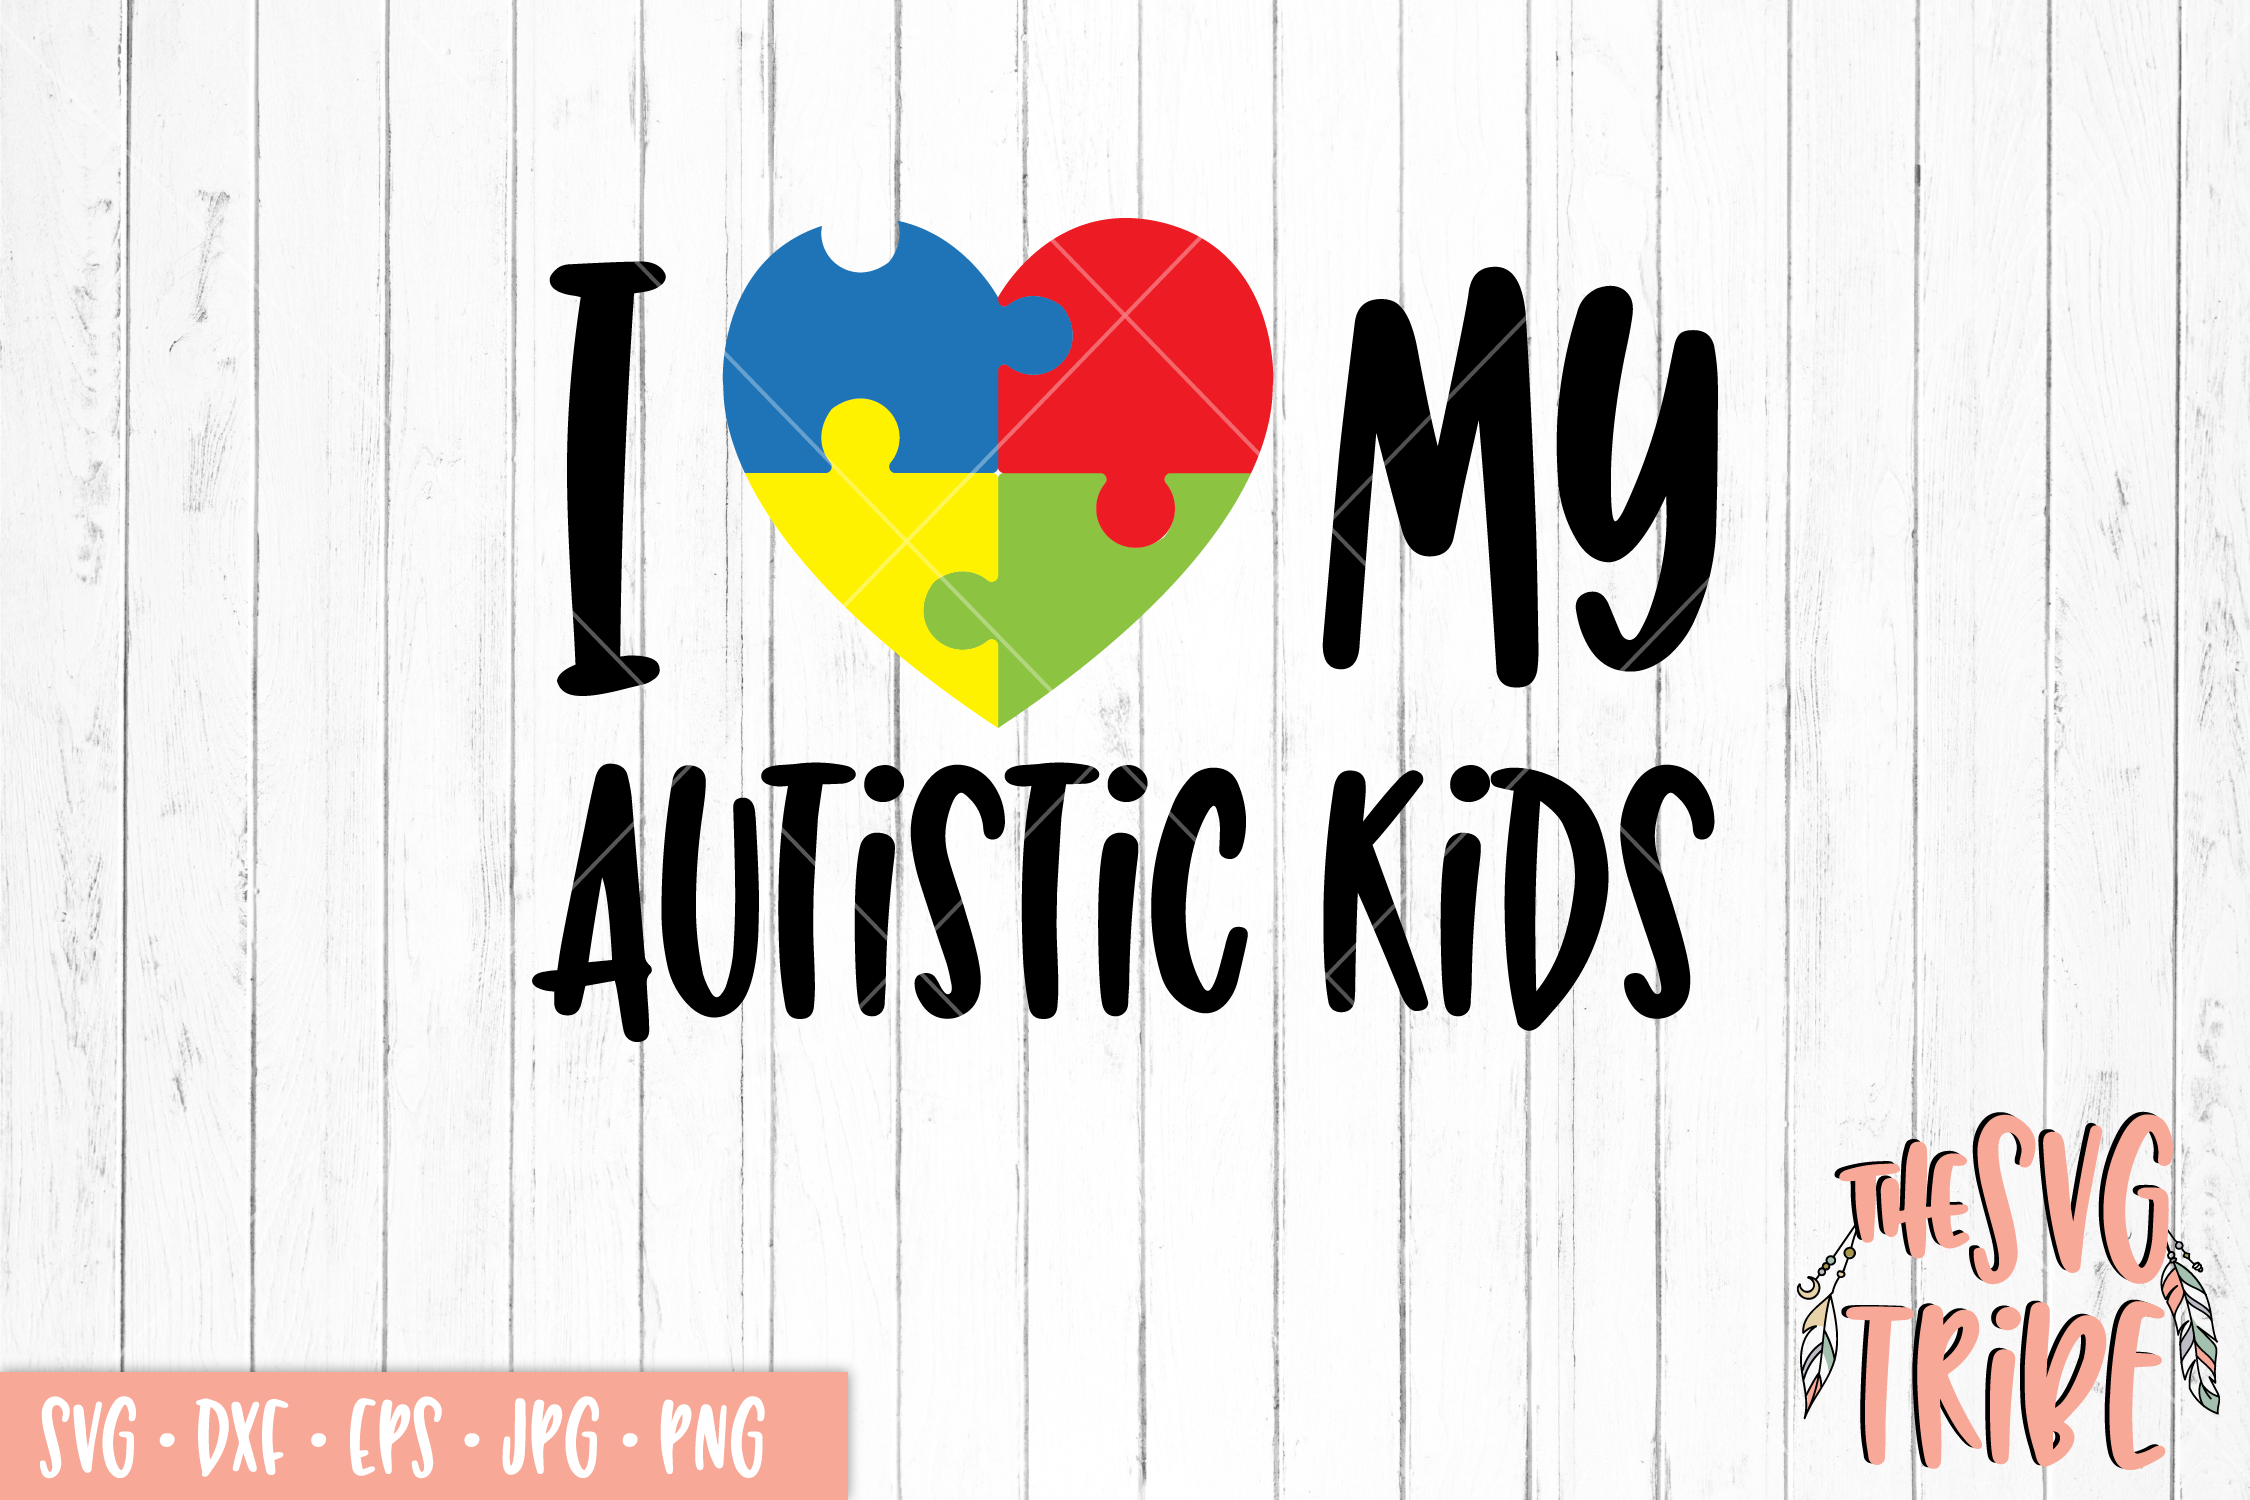 Download I Love My Autistic Kids SVG DXF PNG EPS JPG Cutting File (108826) | SVGs | Design Bundles